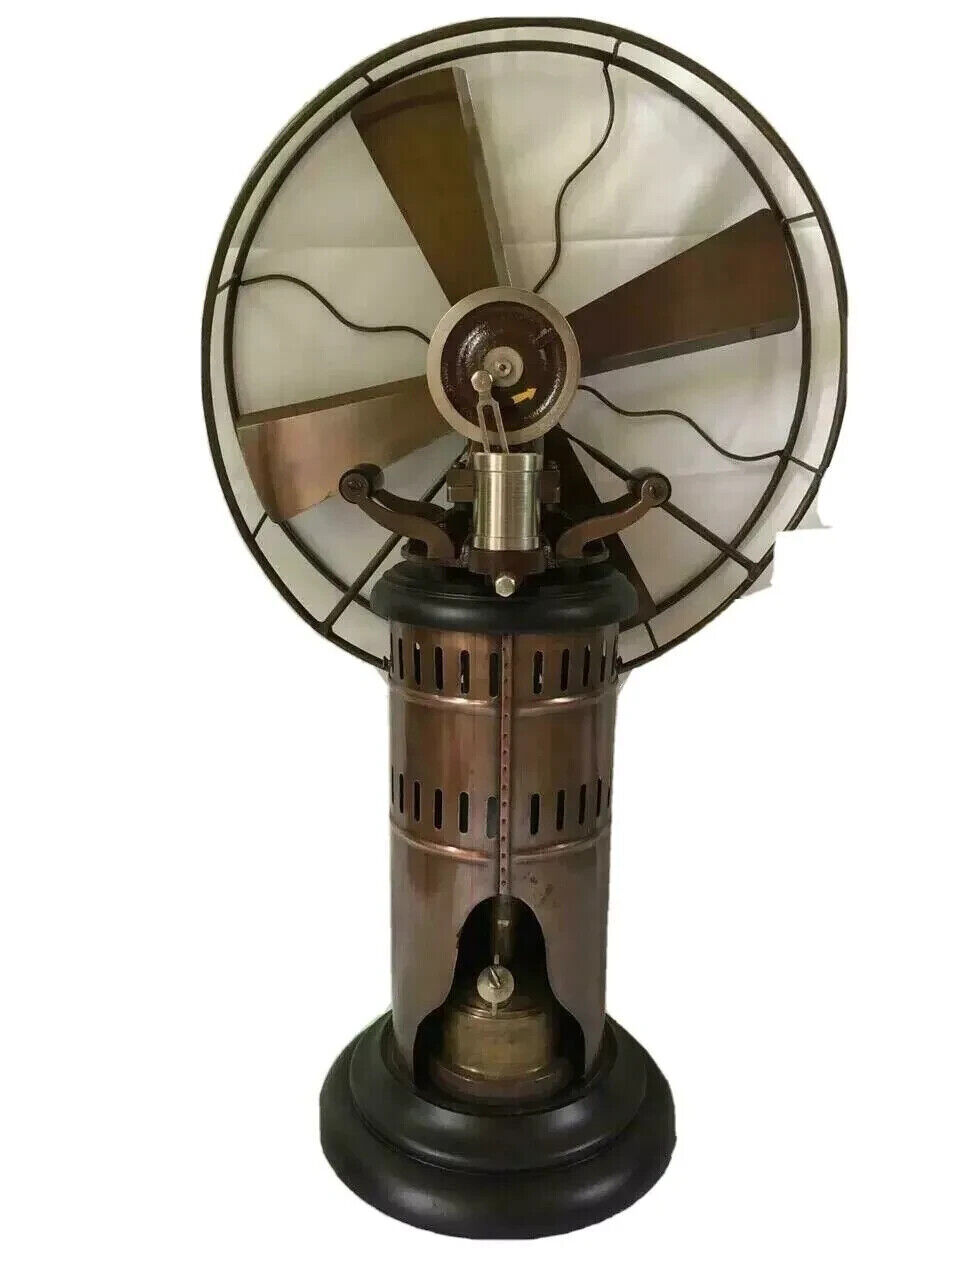 Vintage Steam Operated Fan Antique Kerosene Oil Working Fan Collectibles Museum